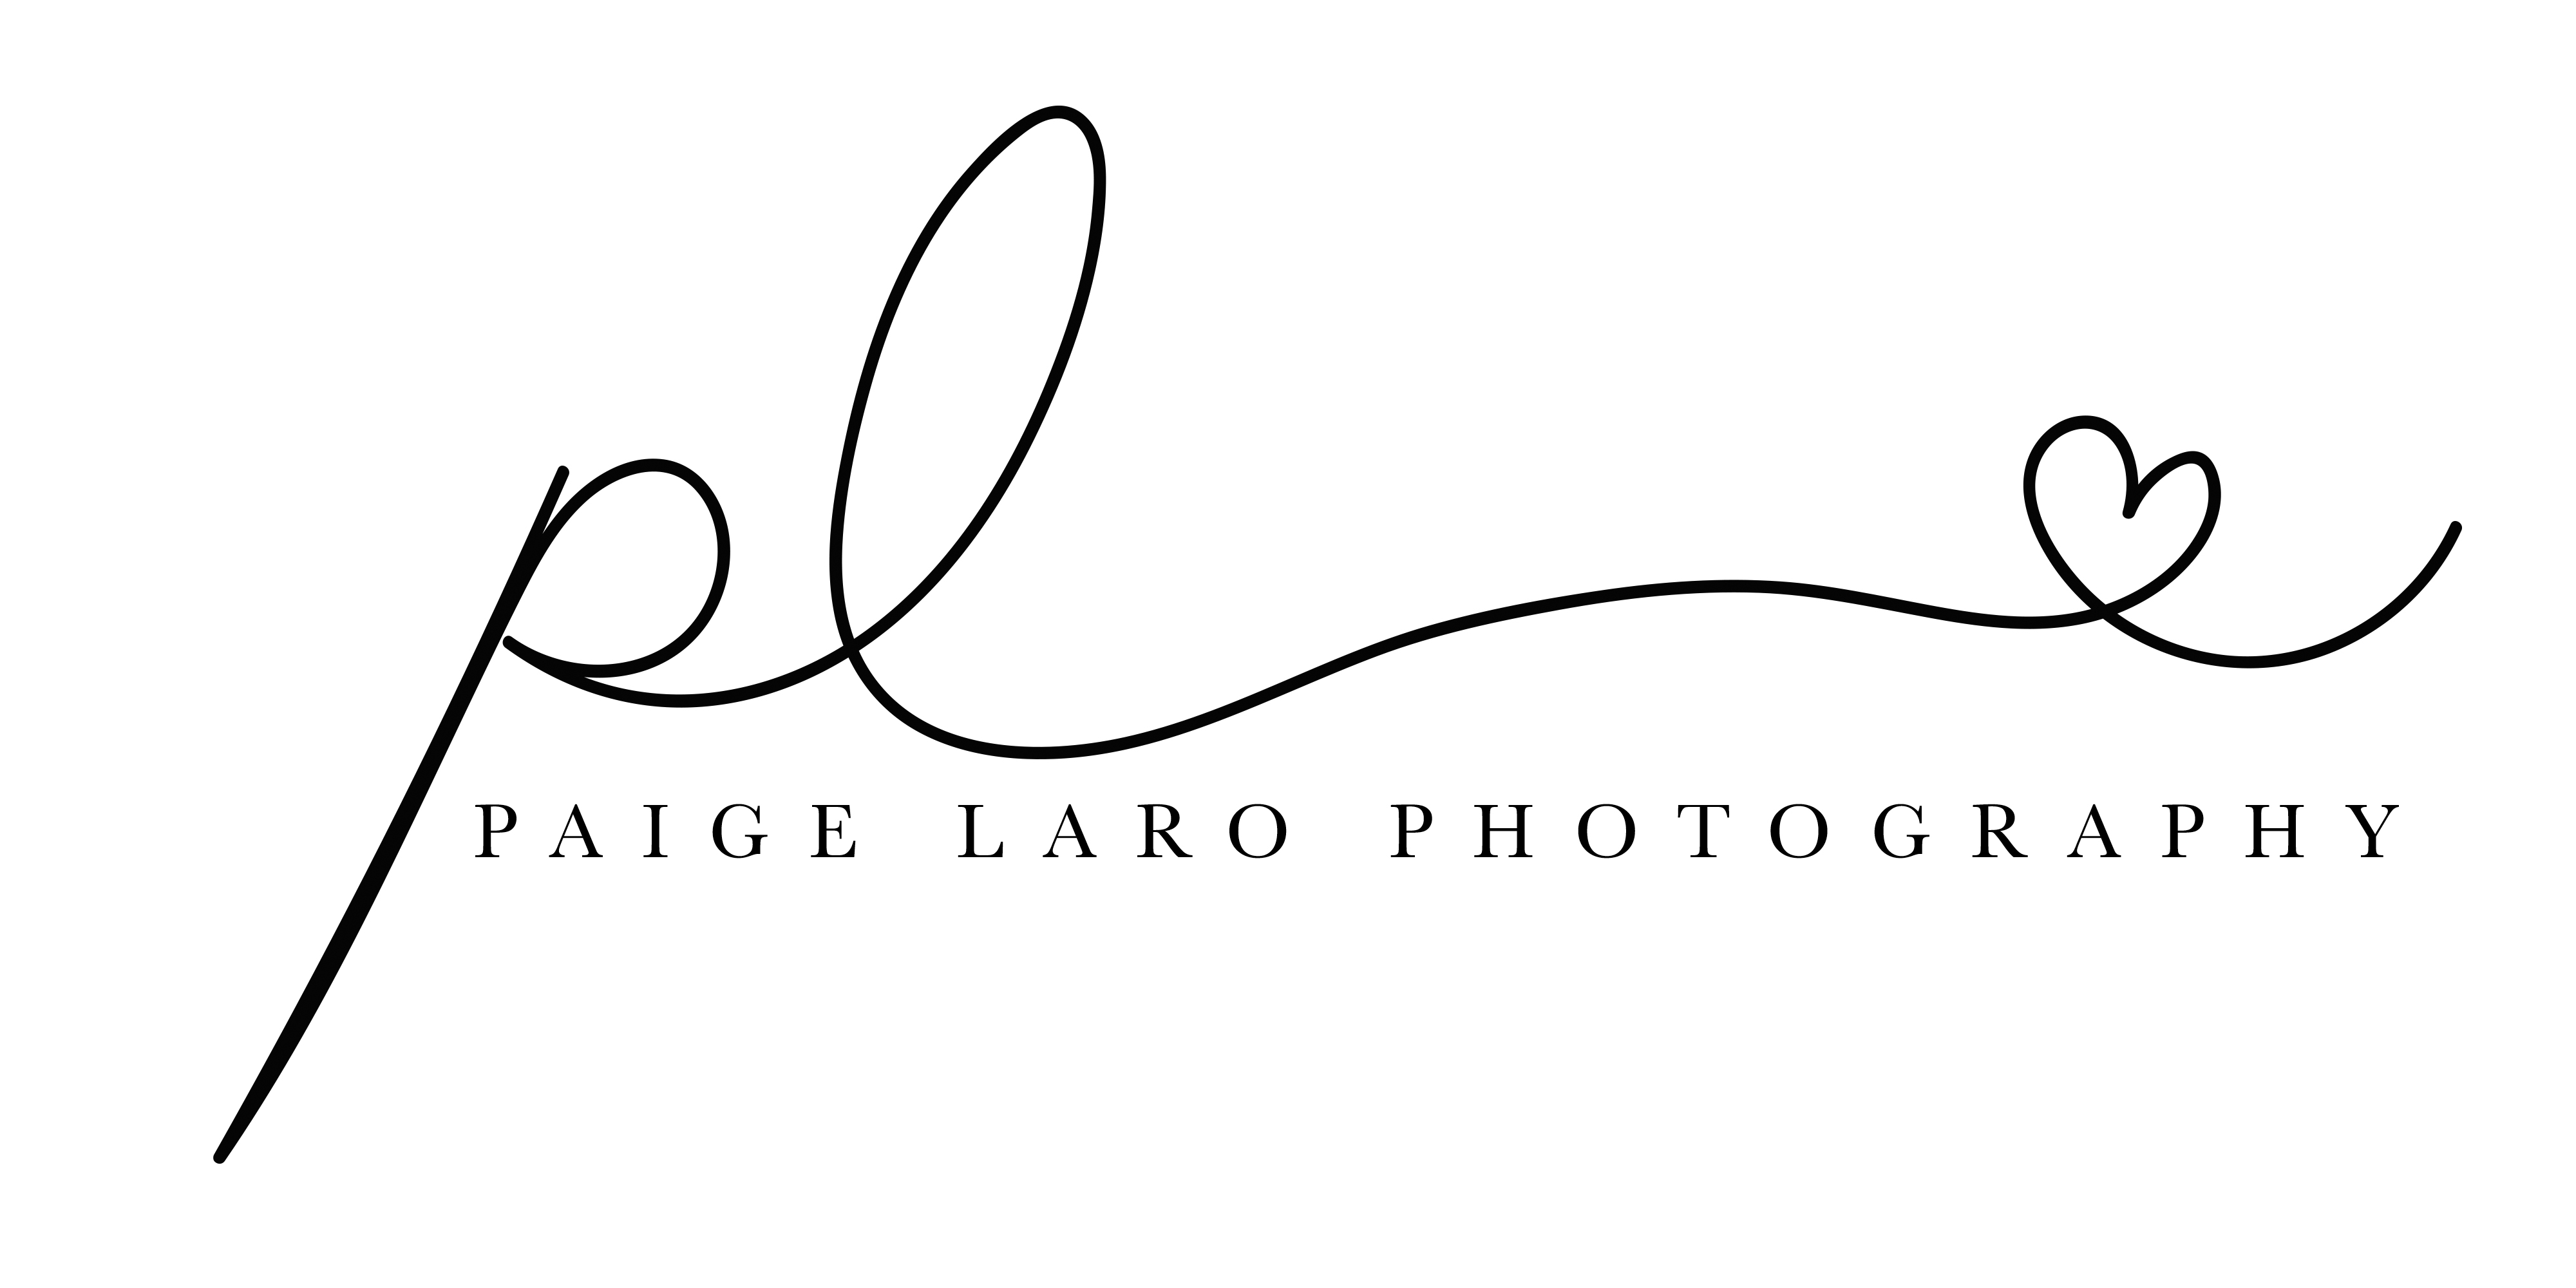 Paige Laro Photography